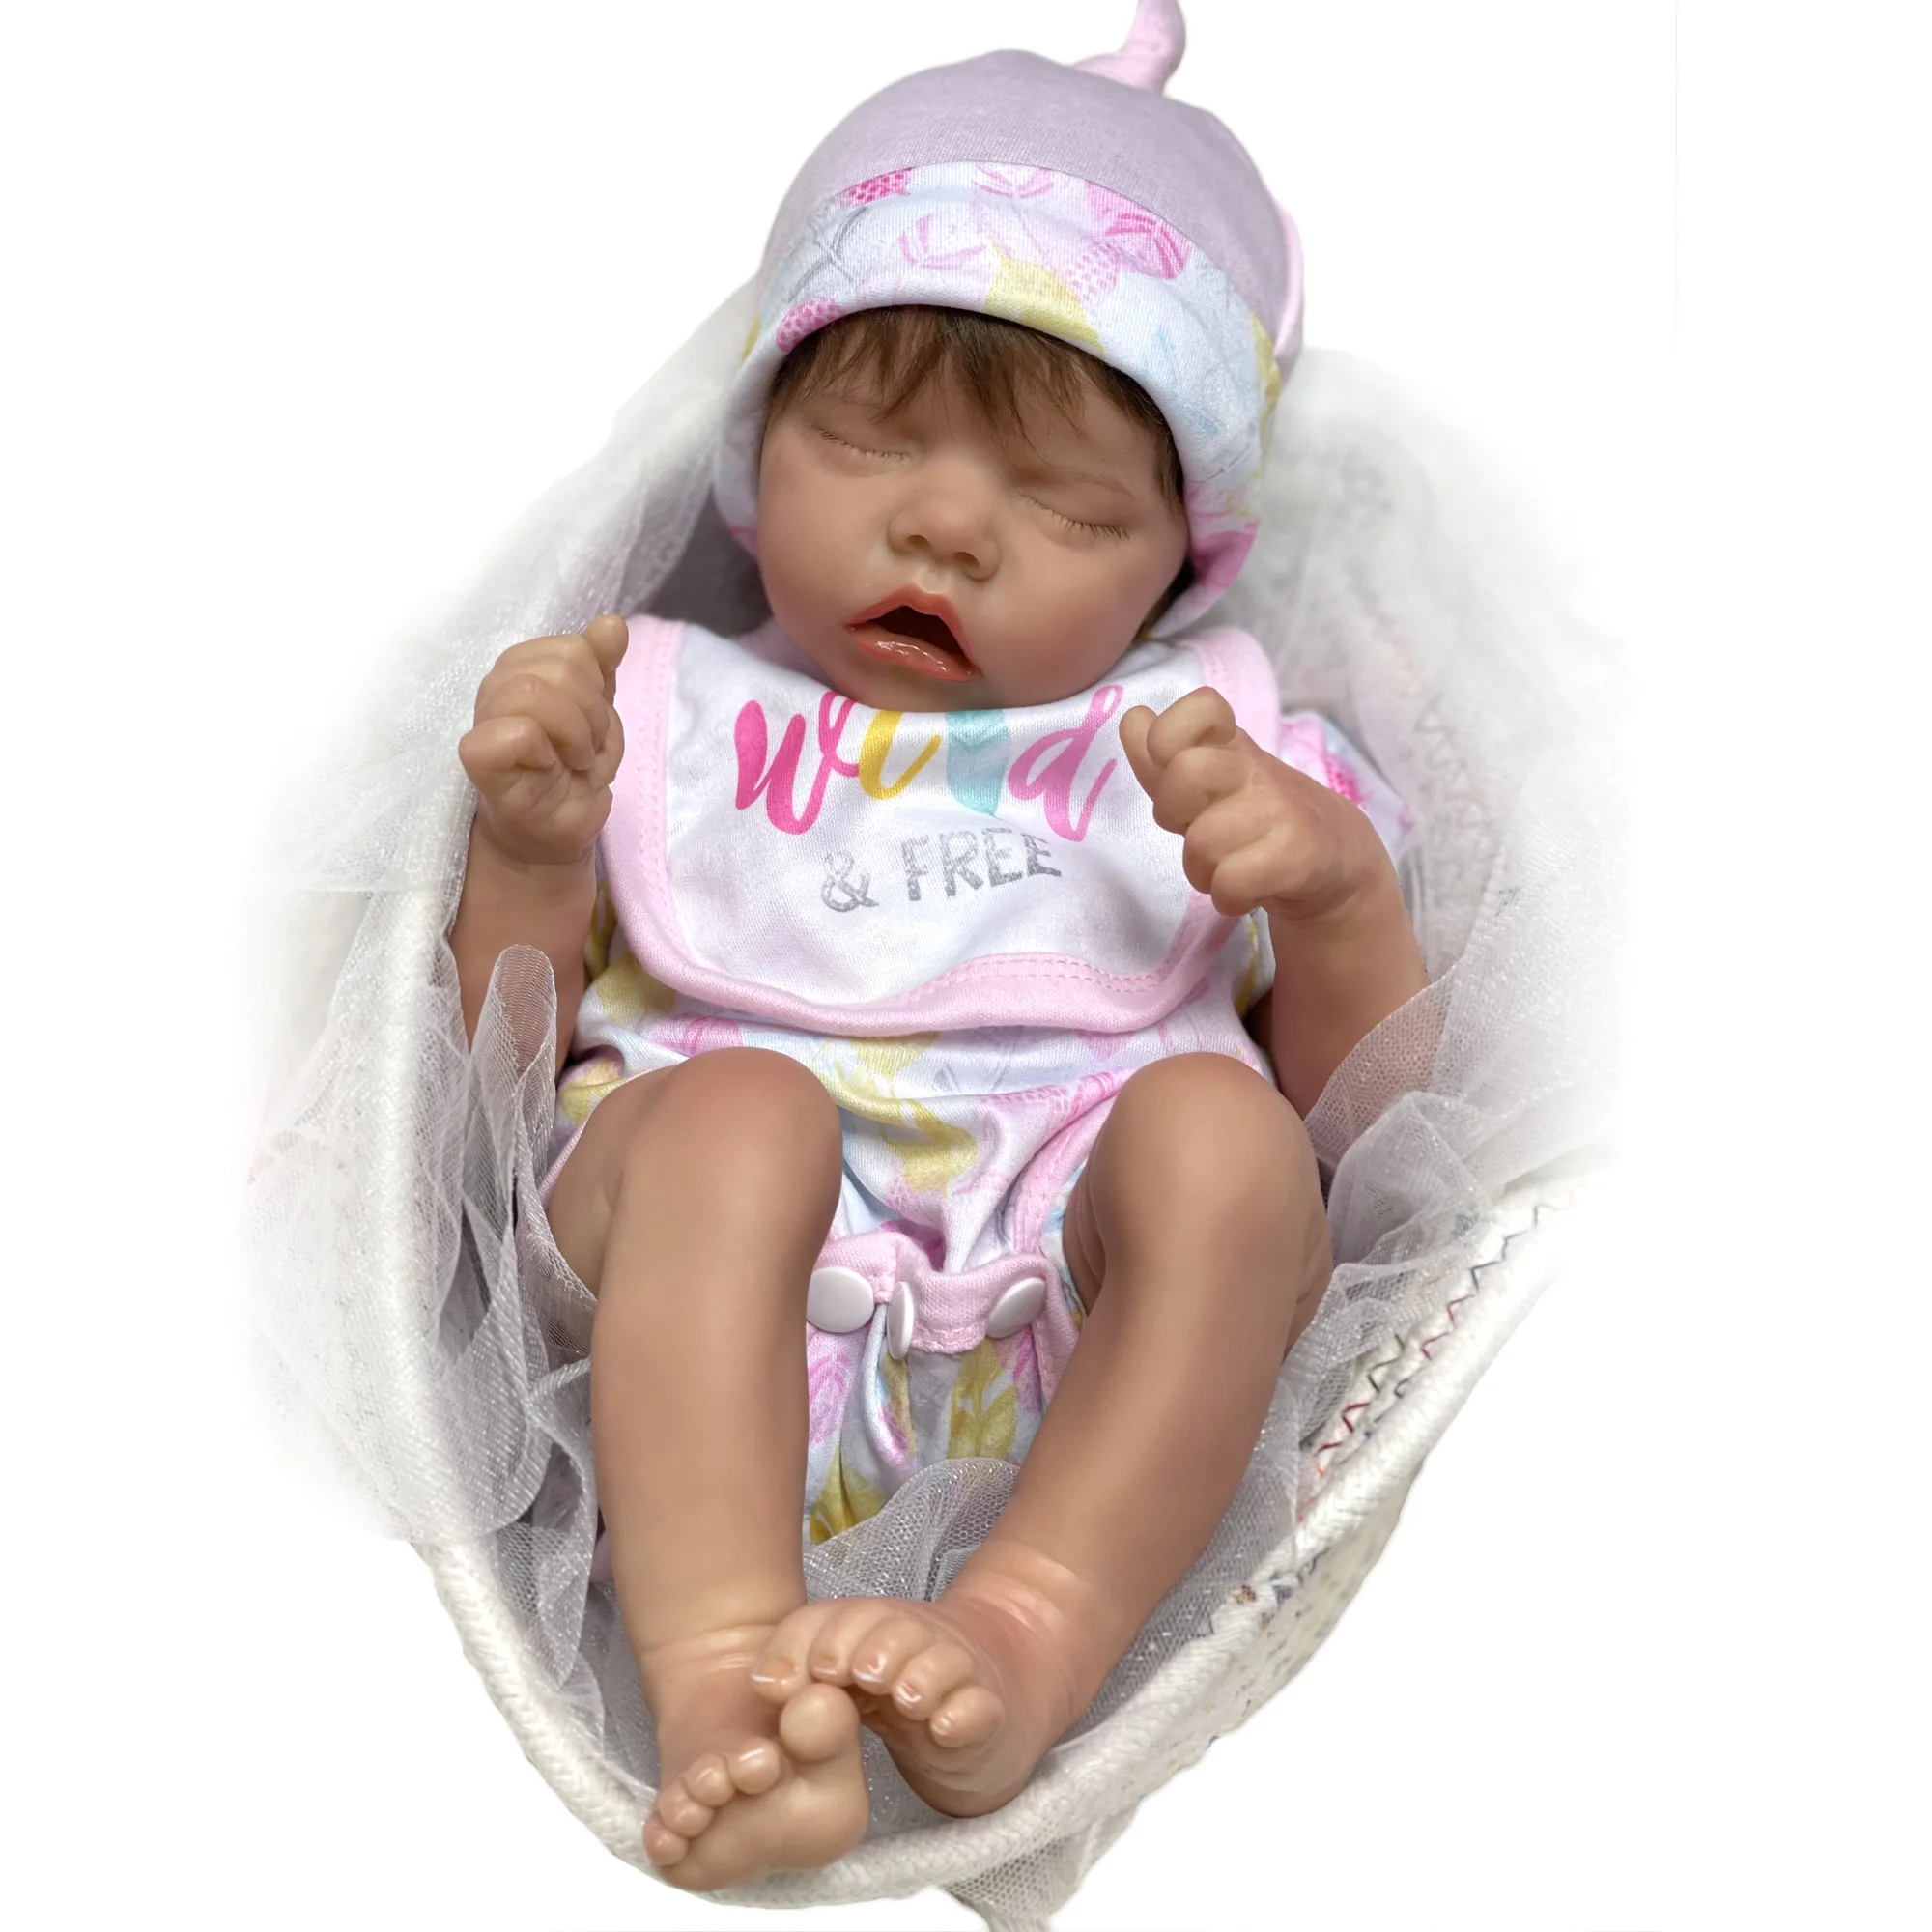 

16 Inch Reborn Baby Dolls Realistic Artist Painted Lifelike Bebe Newborn Soft Silicone Vinyl Toys For Children's Gift